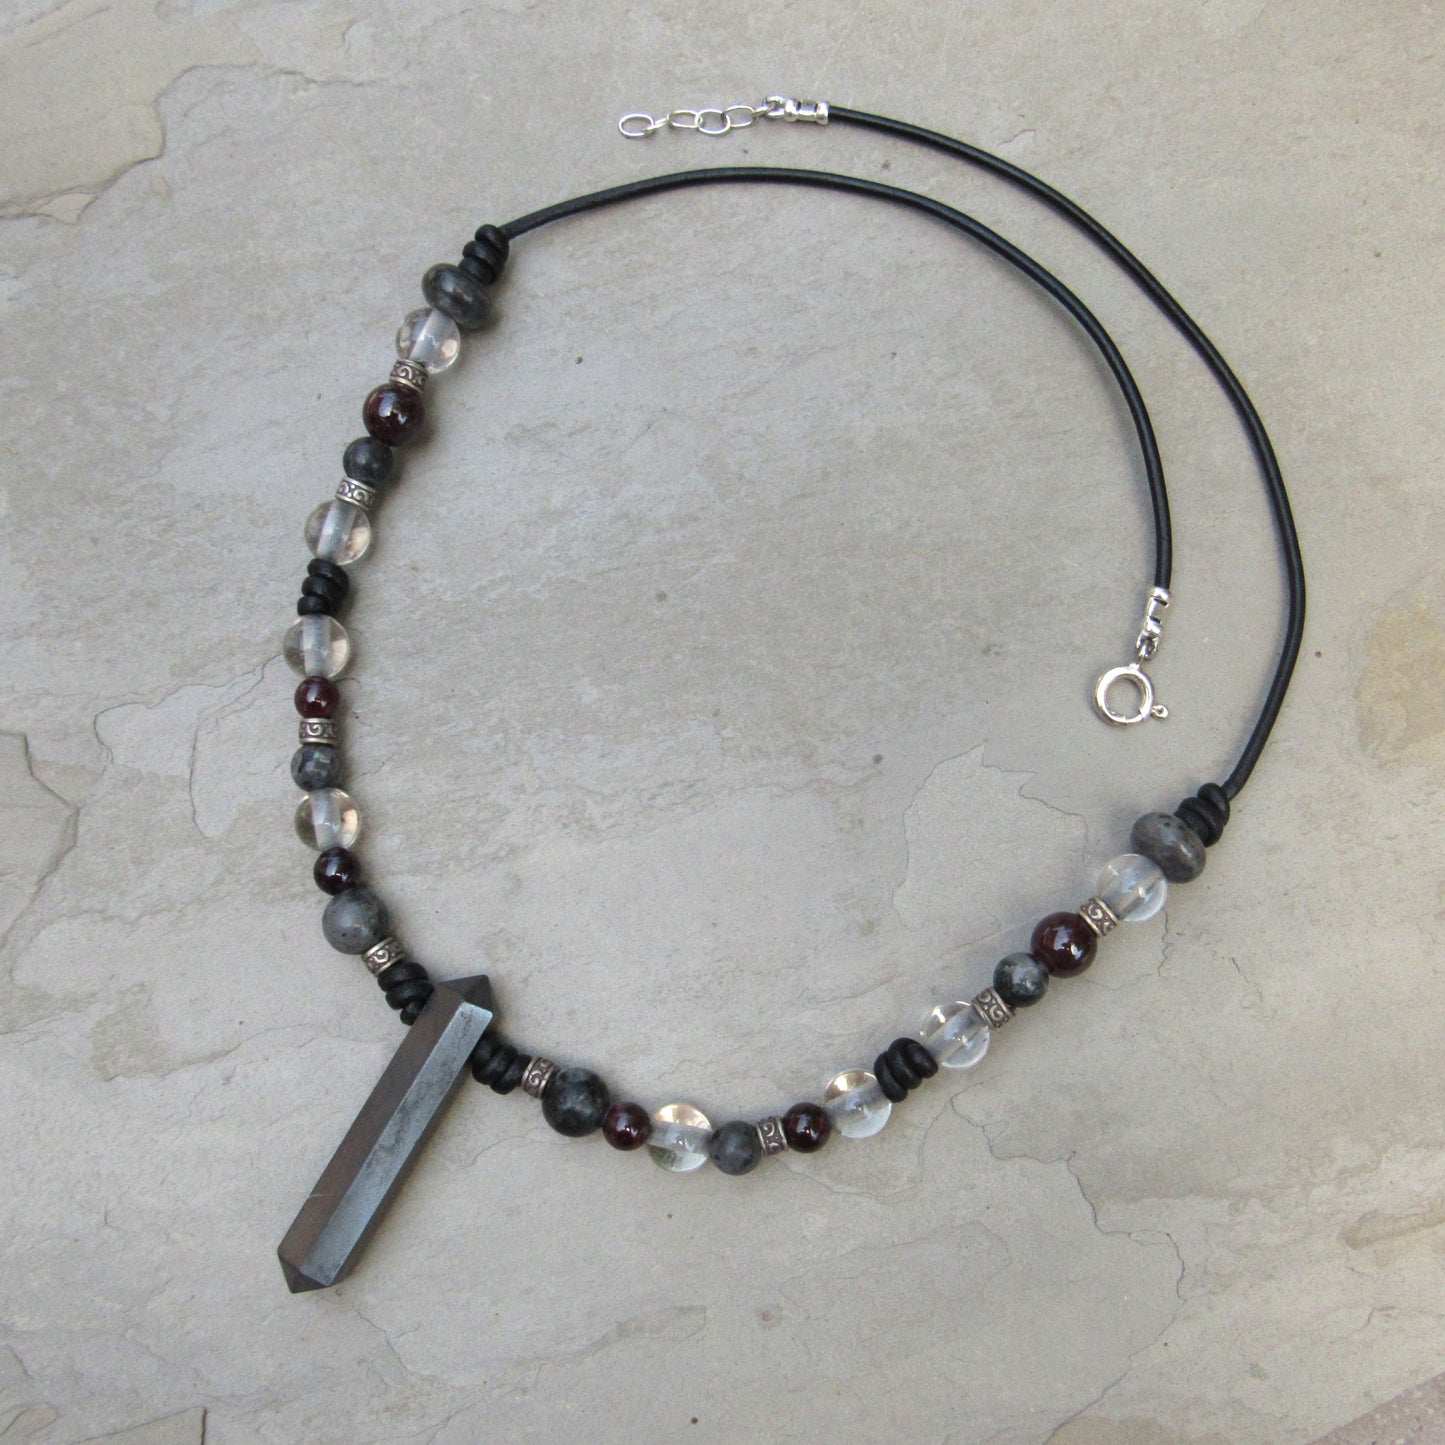 Pyrite, Garnet, Clear Quartz, Black Labradorite gemstones with Sterling Silver on Leather